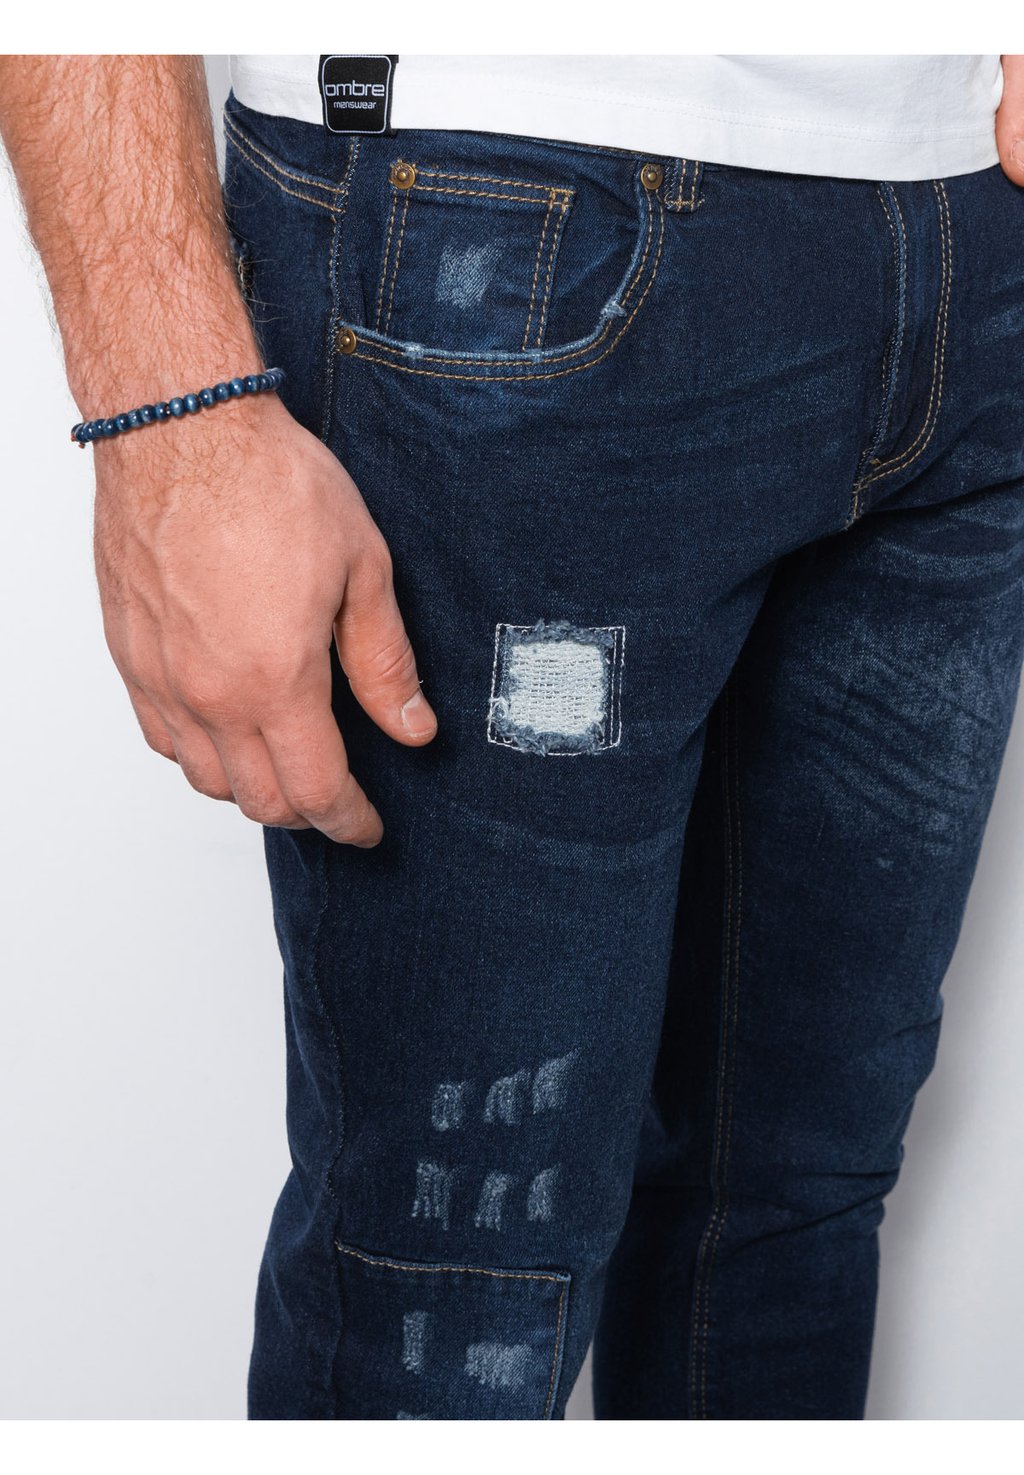 Джинсы Slim Fit Ombre, темные джинсы джинсы ostin темные 44 размер